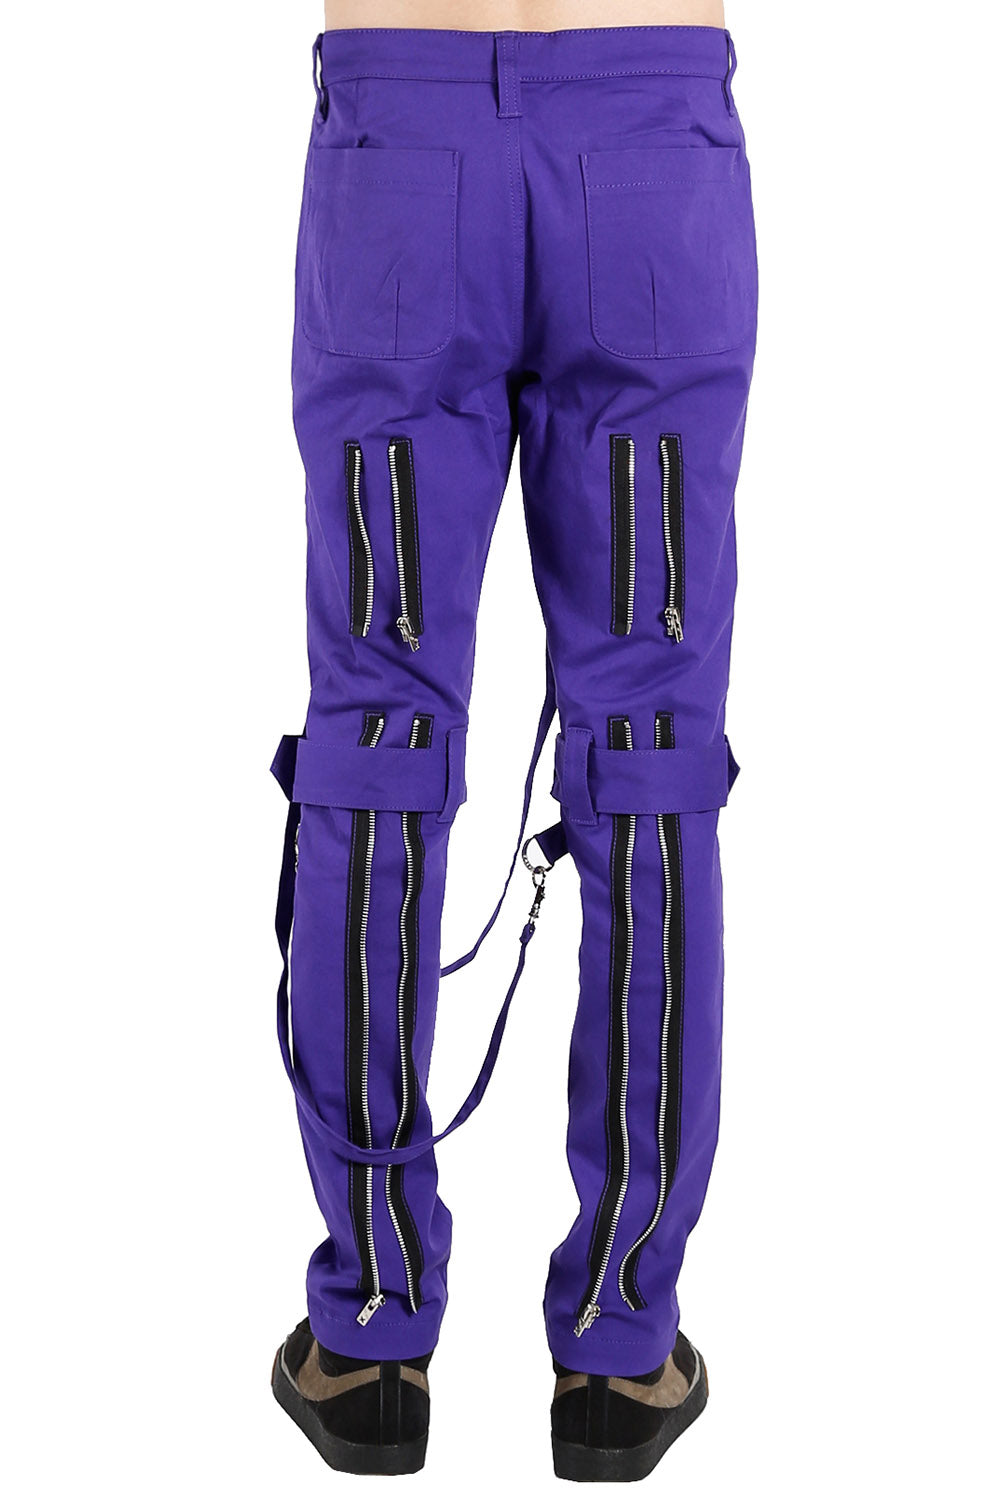 mens goth purple pants